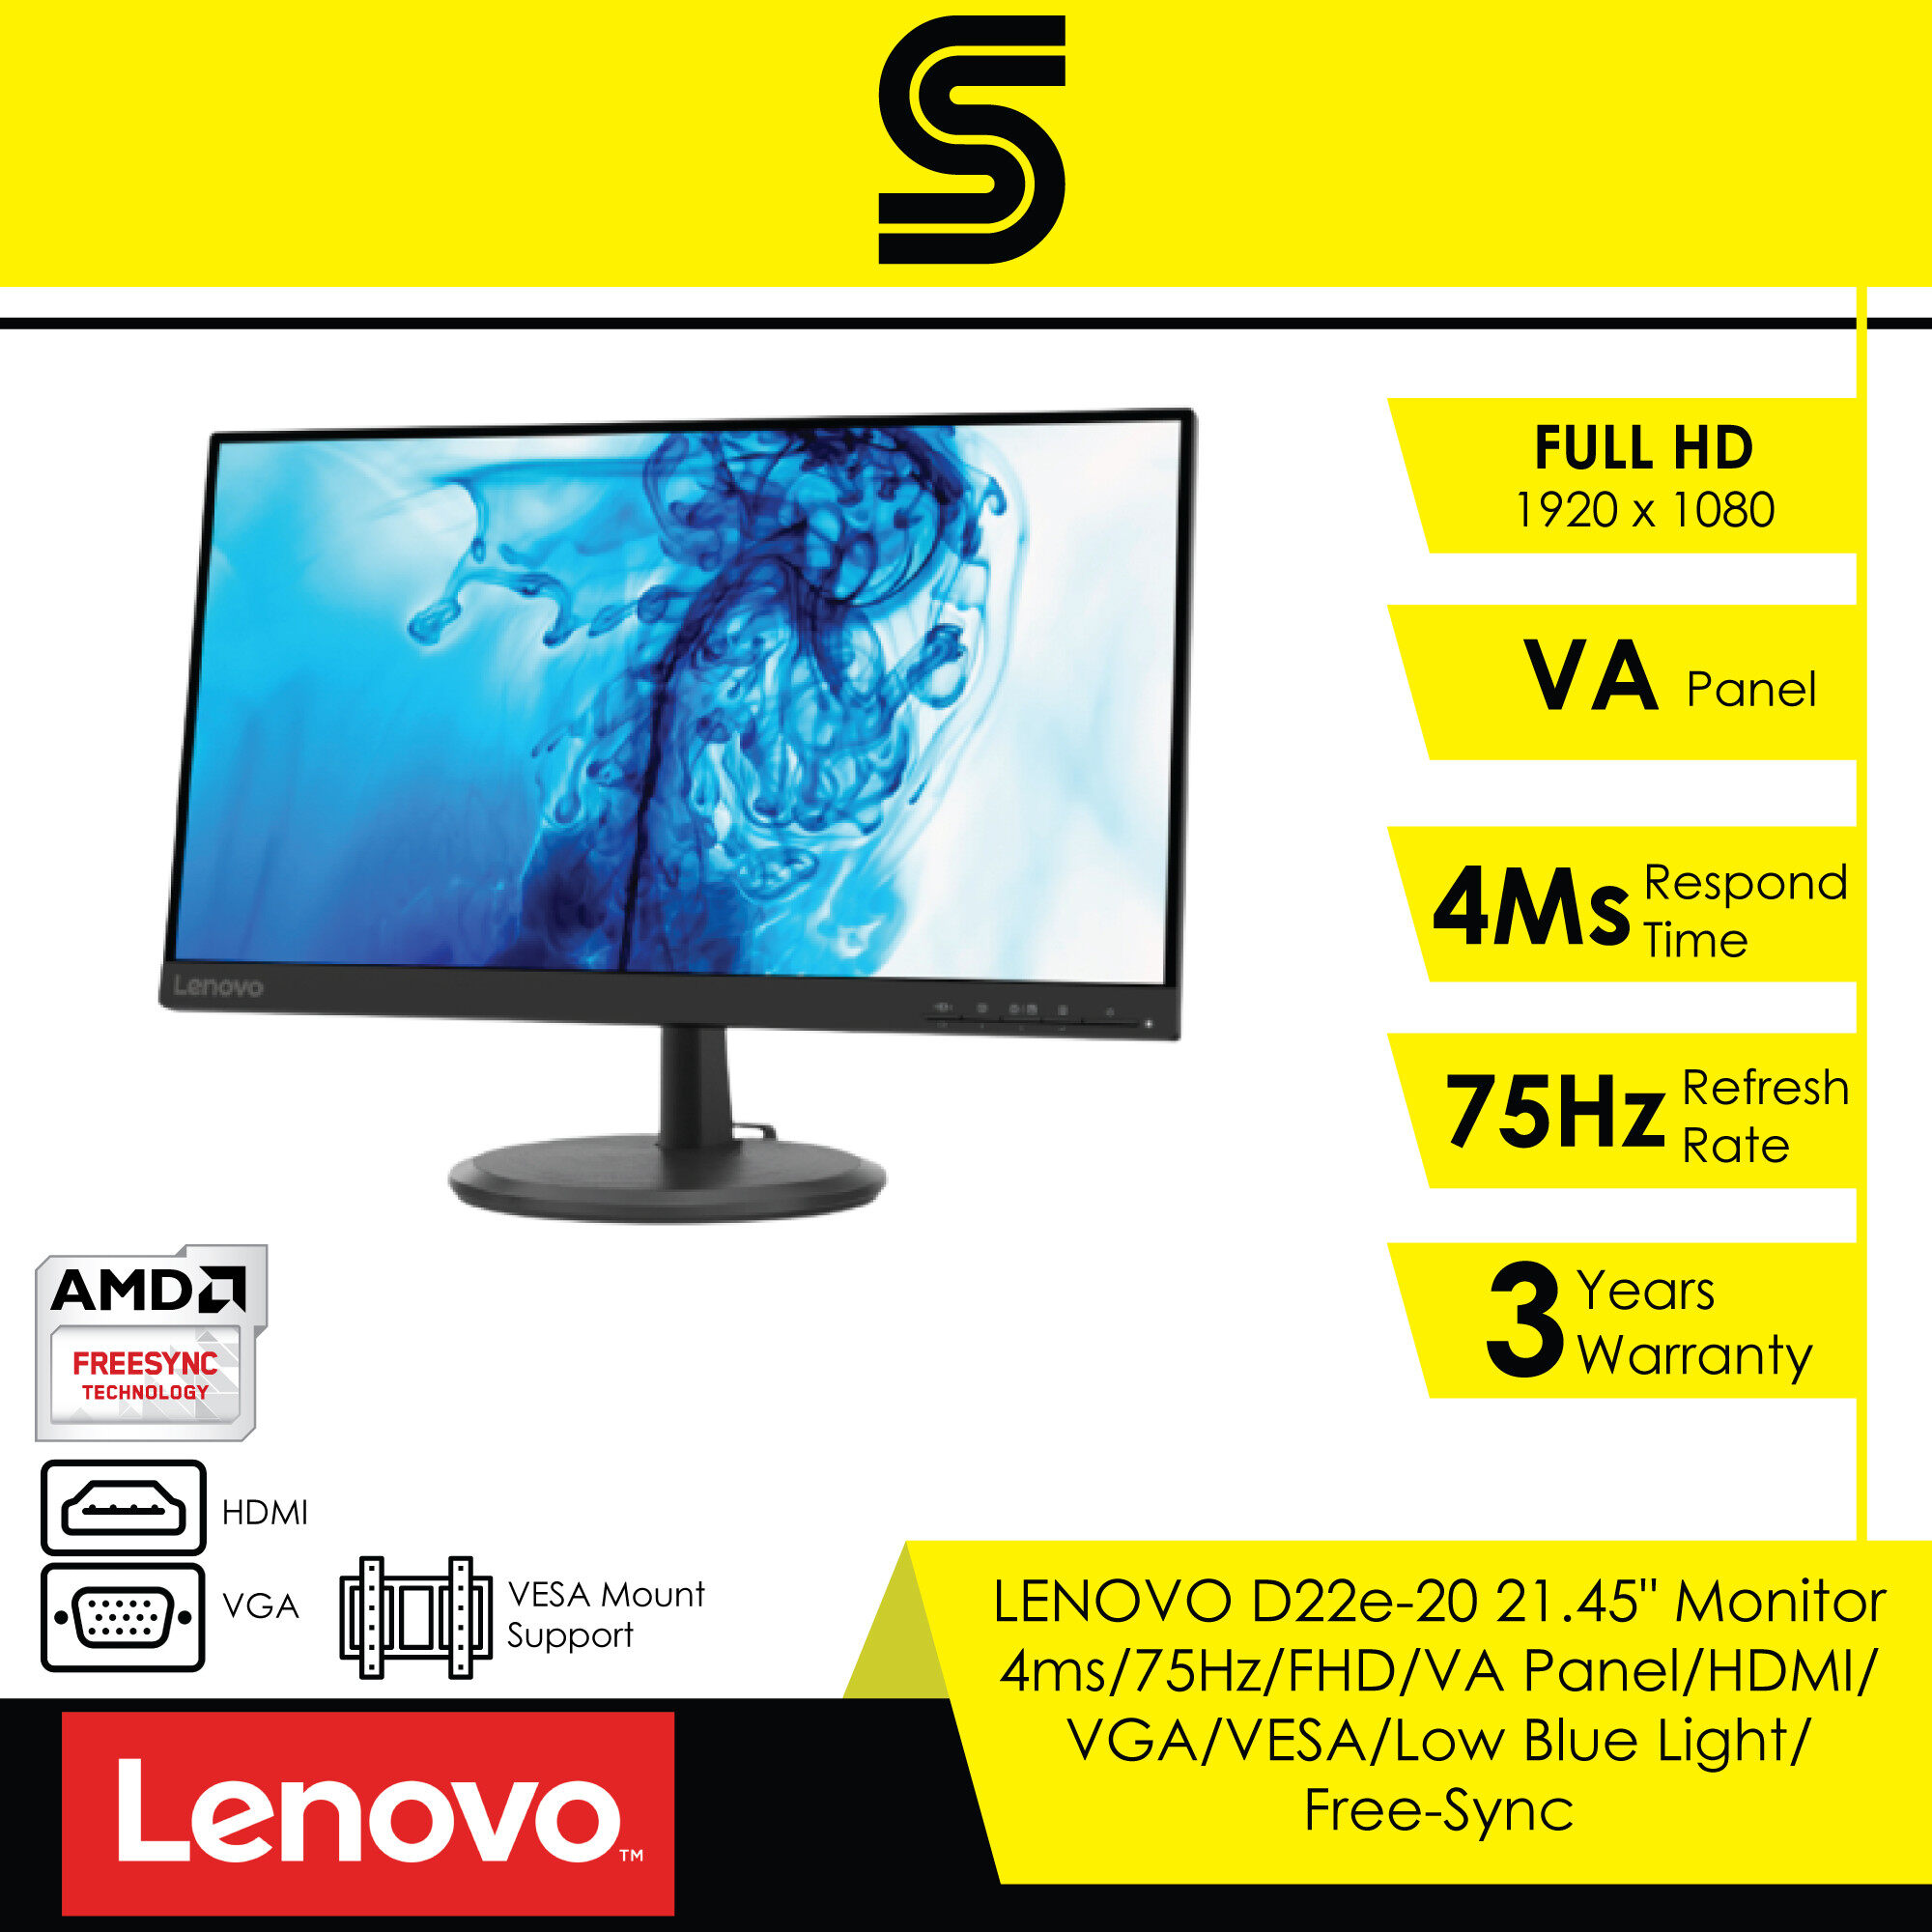 LENOVO D22e-20 21.45" Monitor - 4ms / 75Hz / FHD / VA Panel / HDMI / VGA / VESA / Low Blue Light / Free-Sync